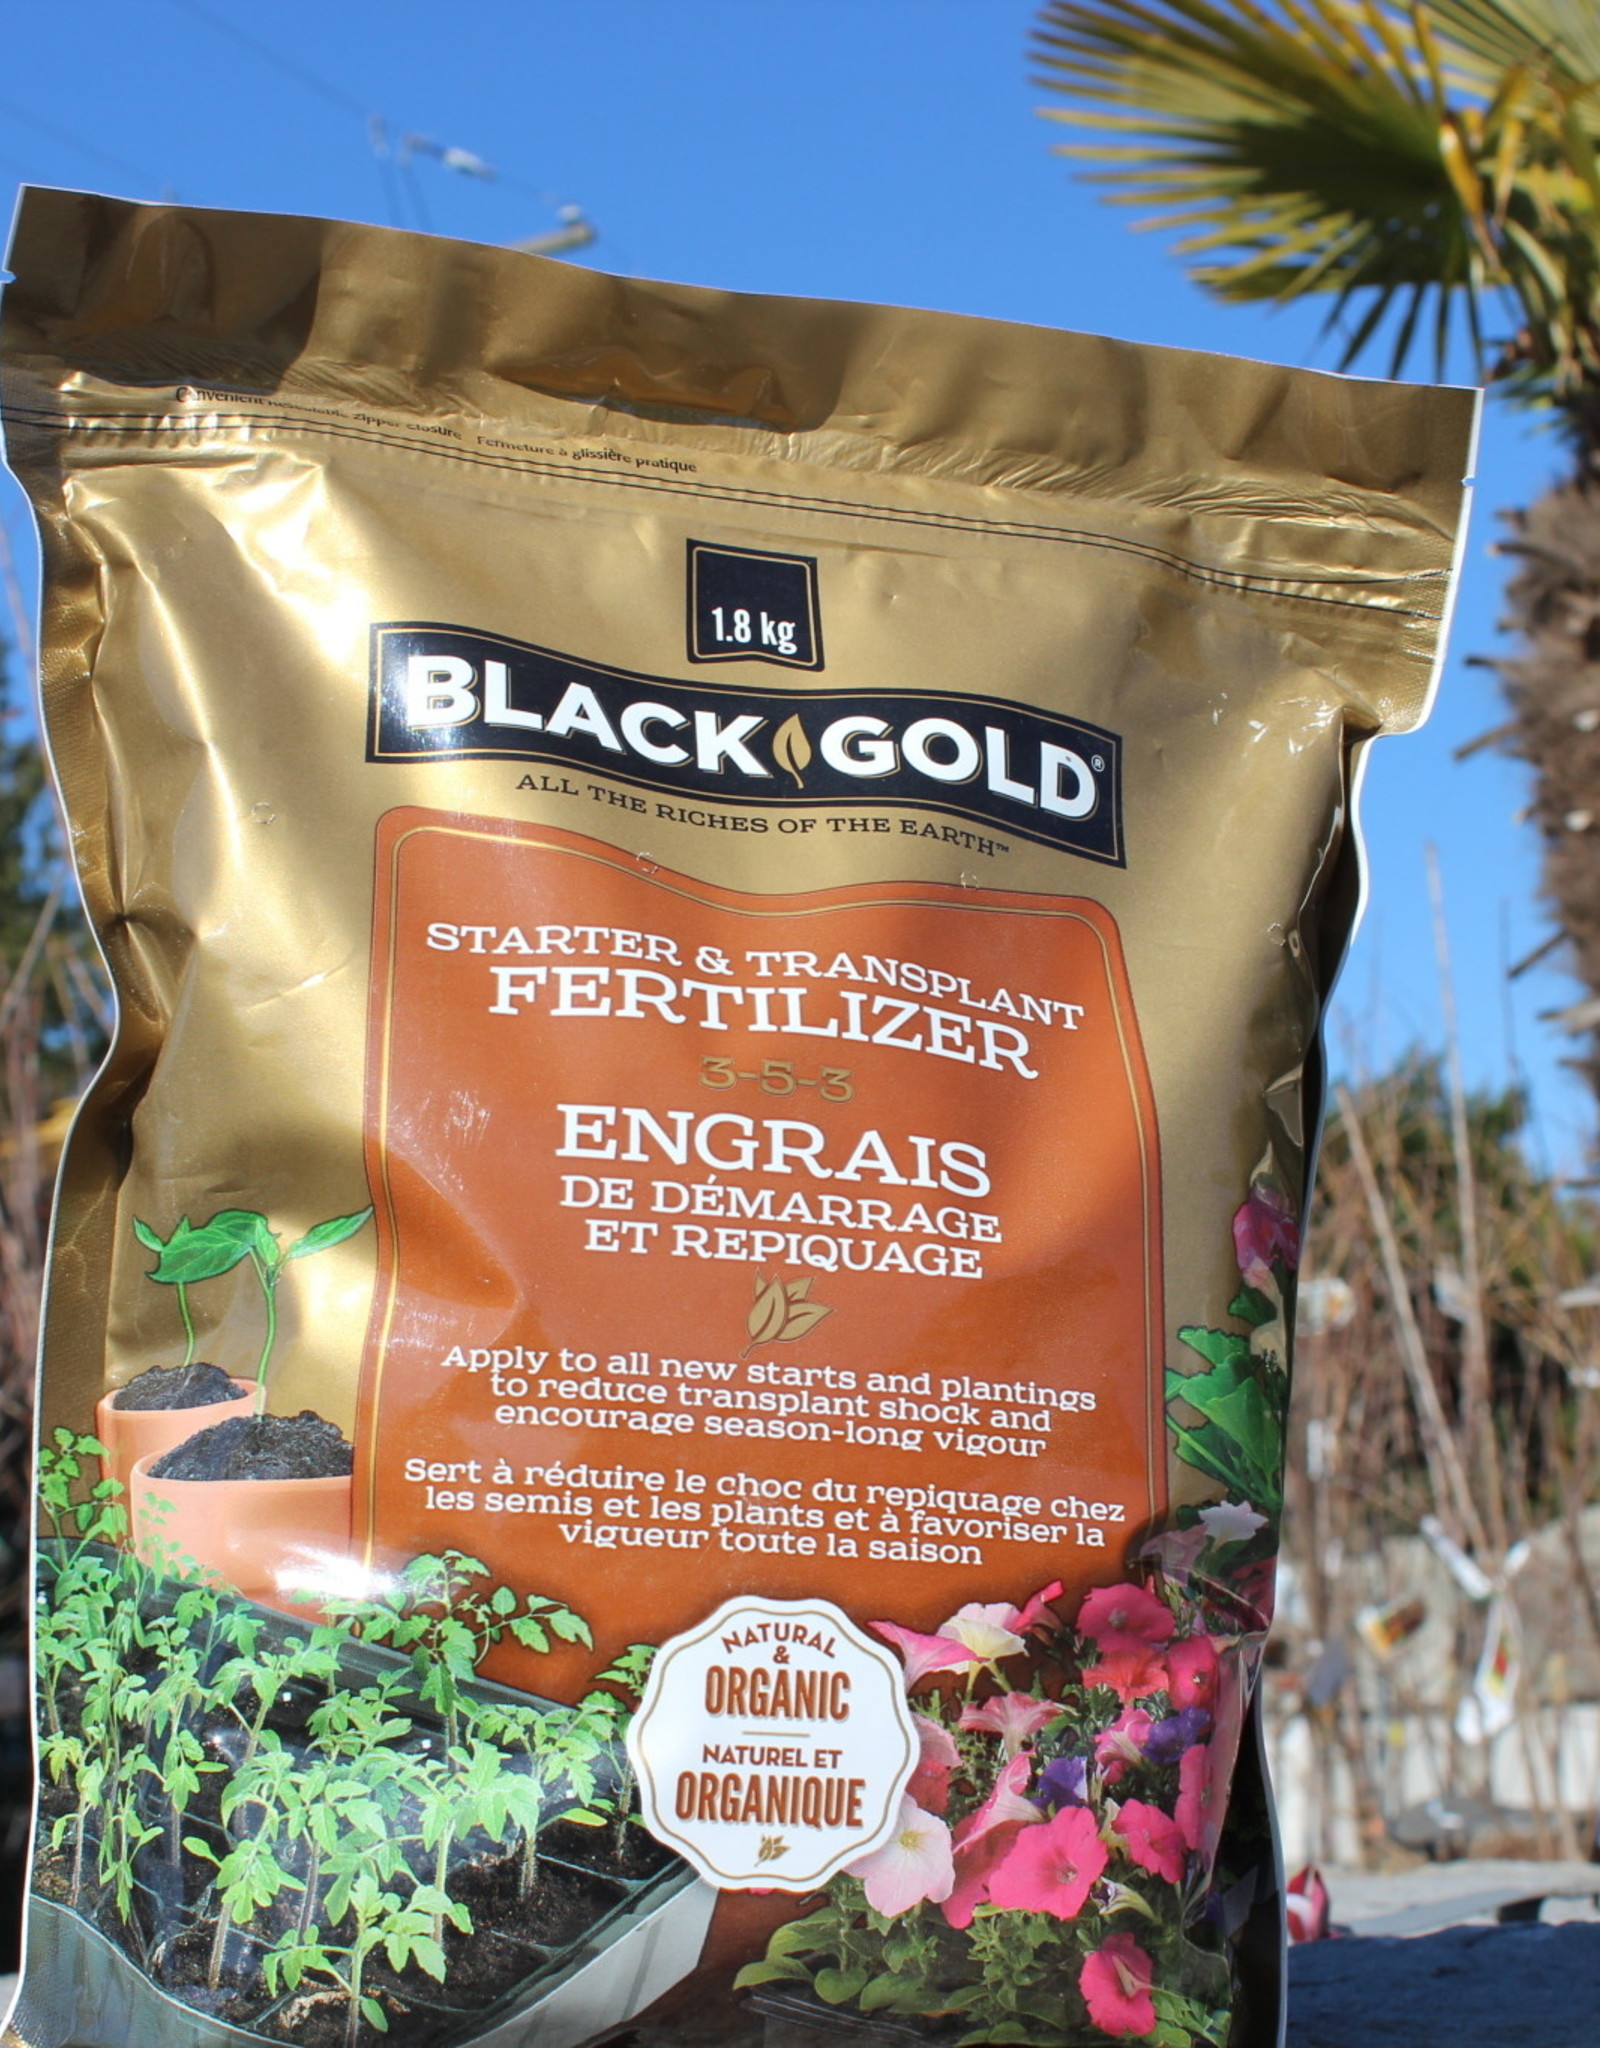 Sun Gro Horticulture Canada Black Gold Starter & Transplant Fertilizer 3-5-3 Natural and Organic 1.8 kg